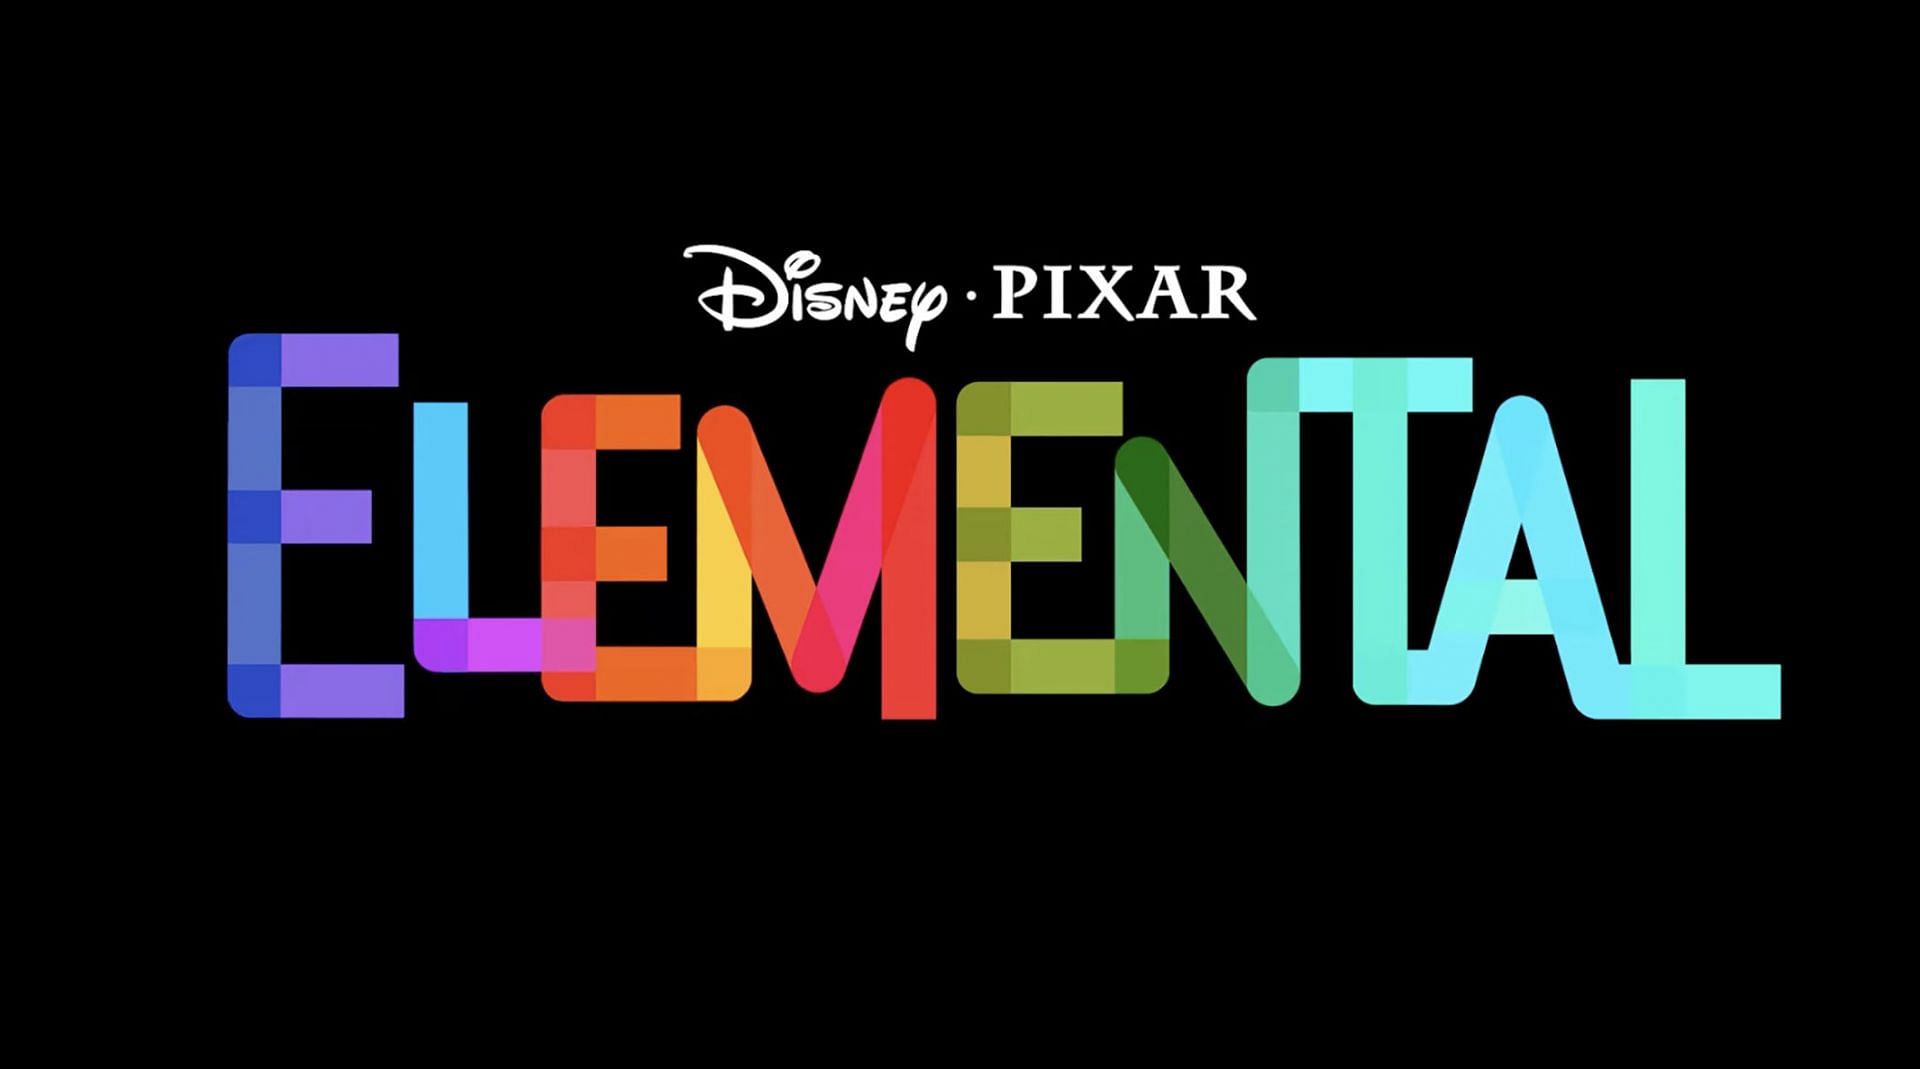 Elemental (Image via Disney Pixar)